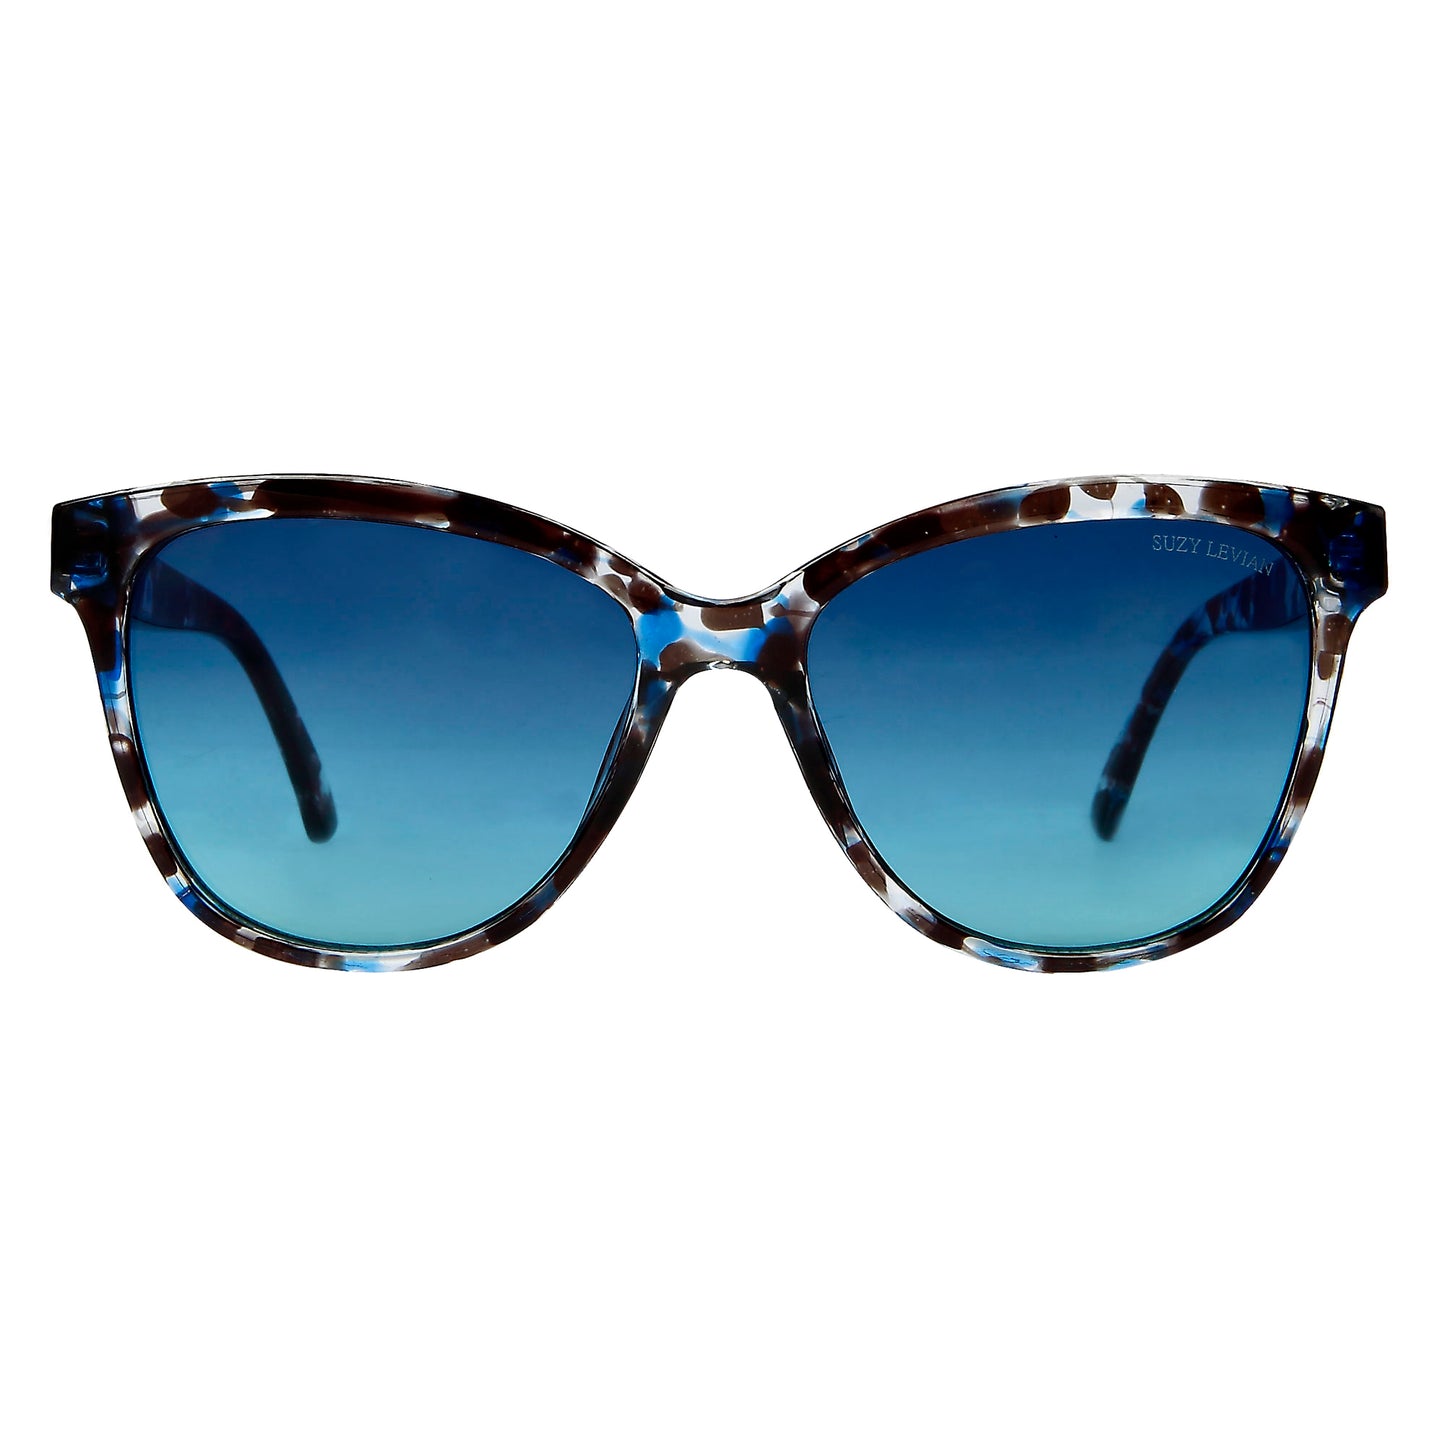 Suzy Levian Women's Blue Tortoise Cat-Eyed Square Lens Sunglasses